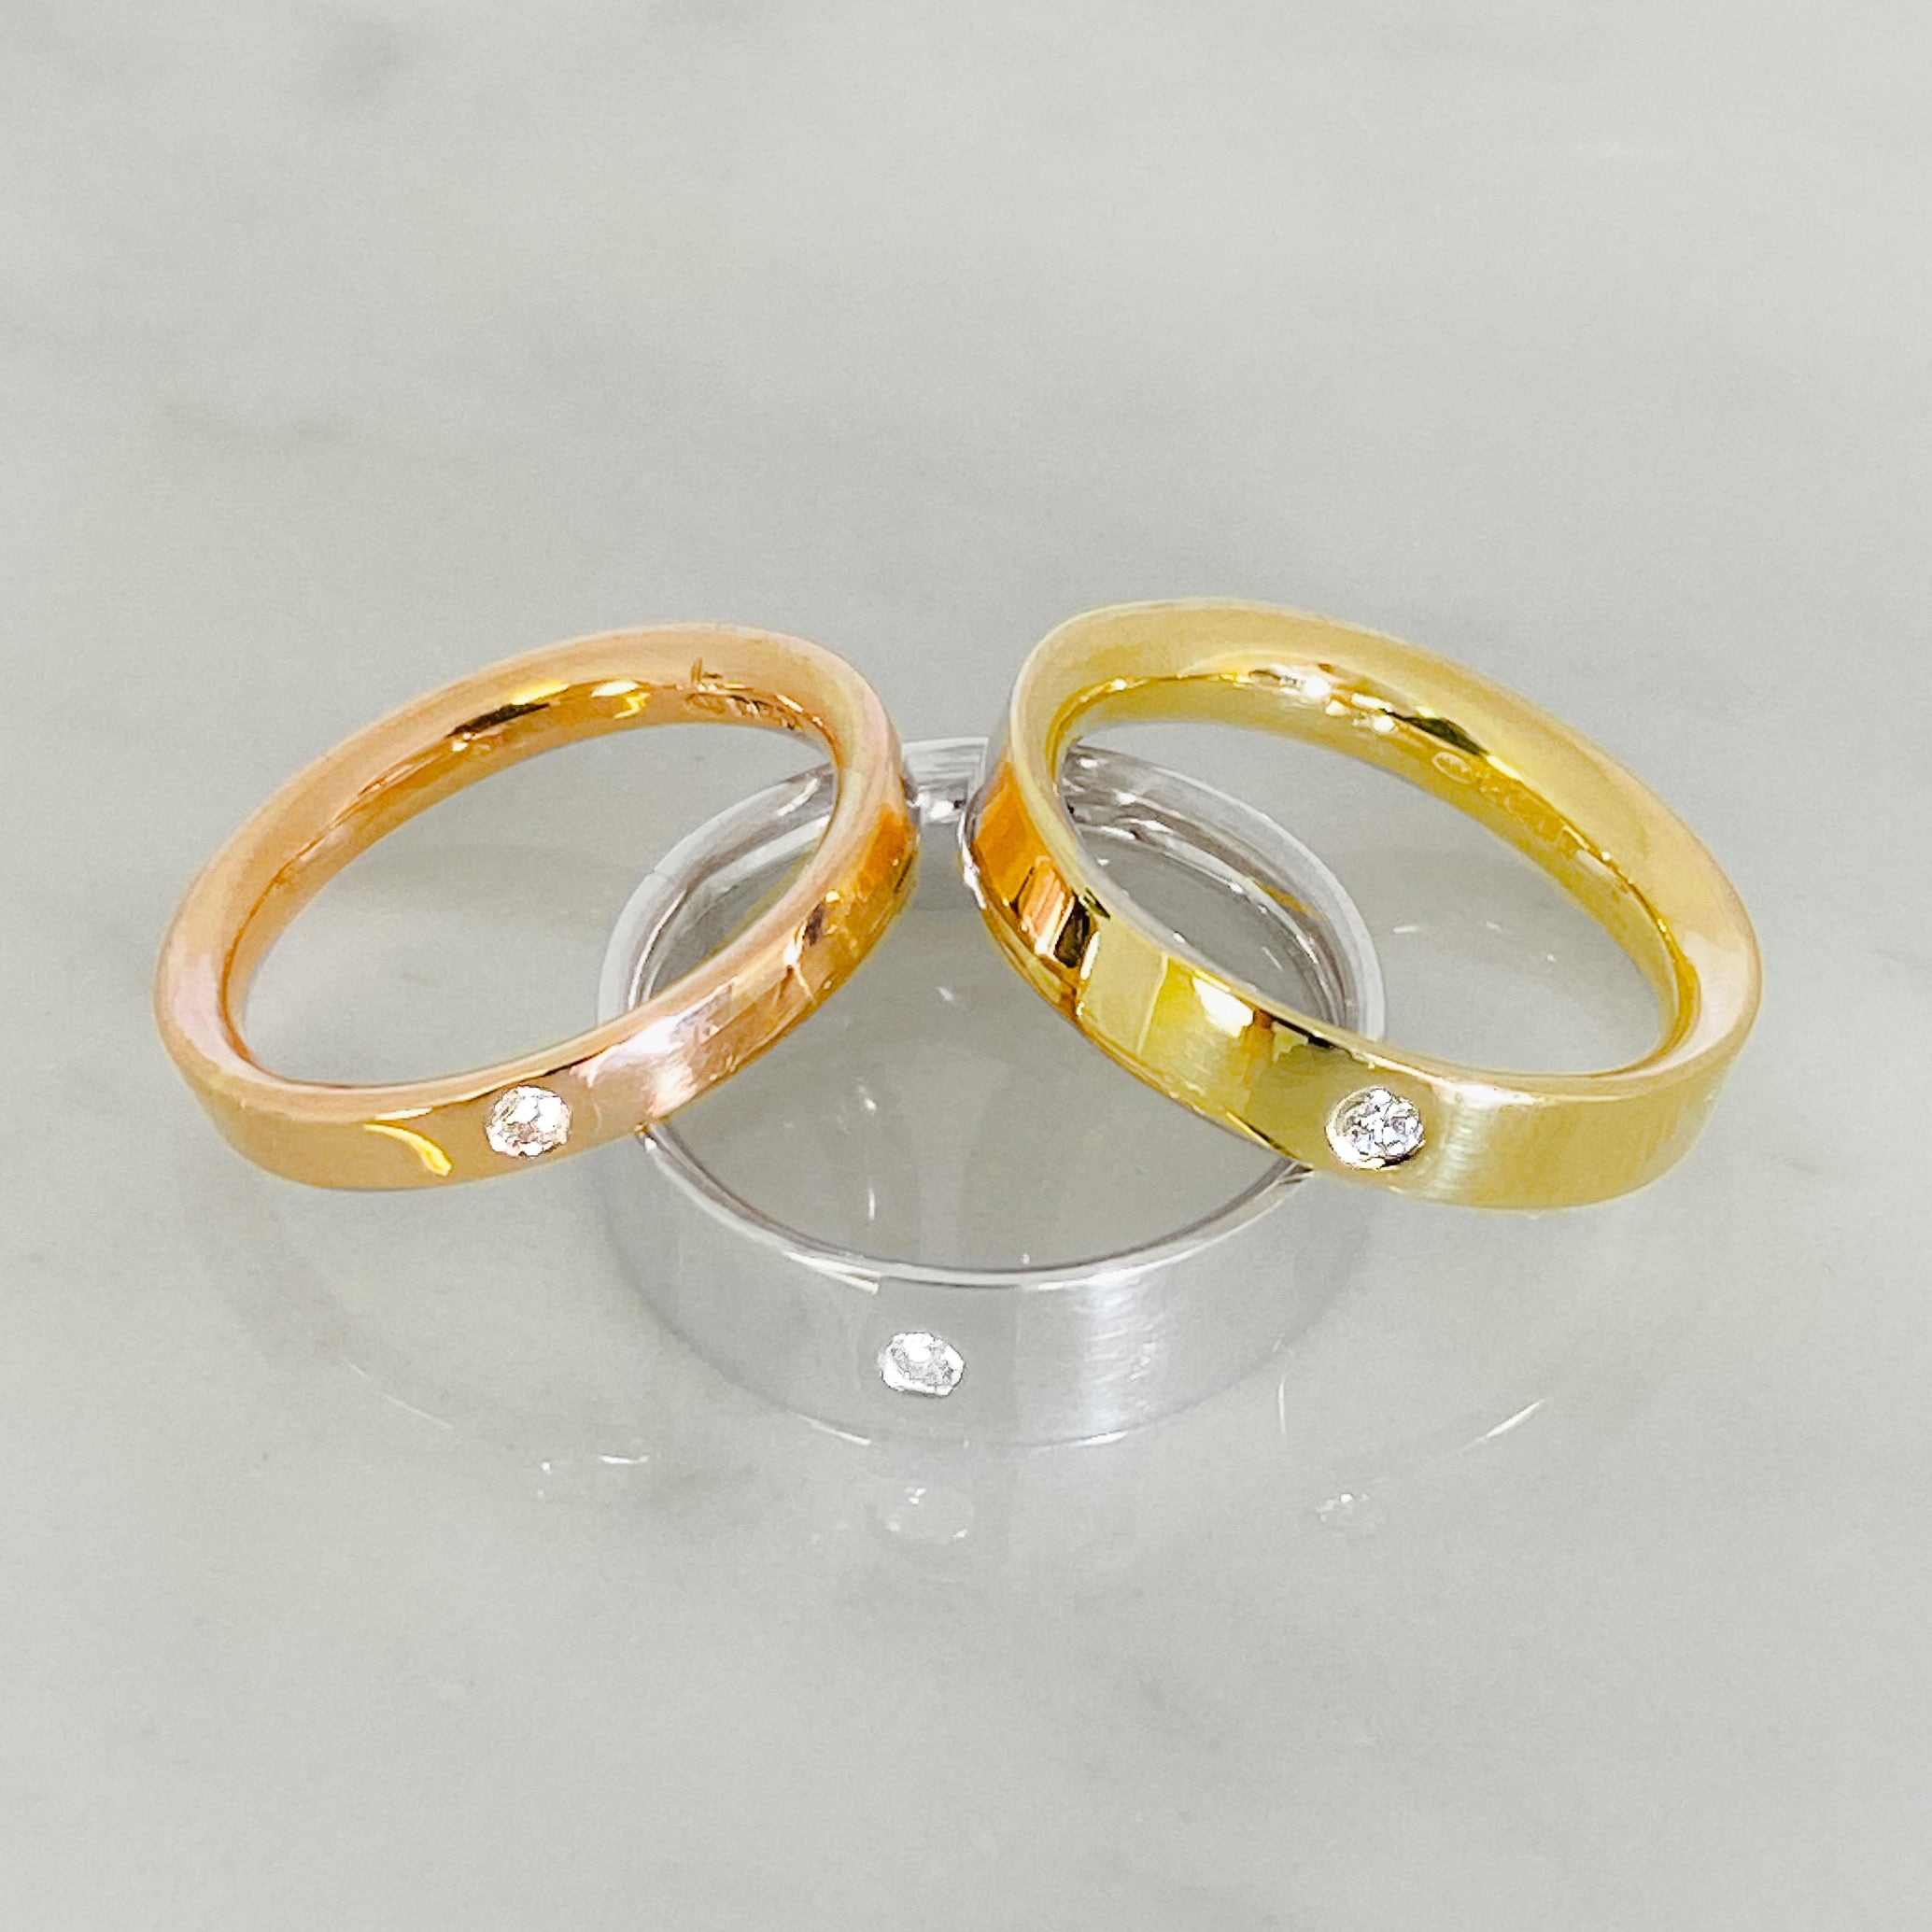 White Gold and Diamond Classic Wedding Ring